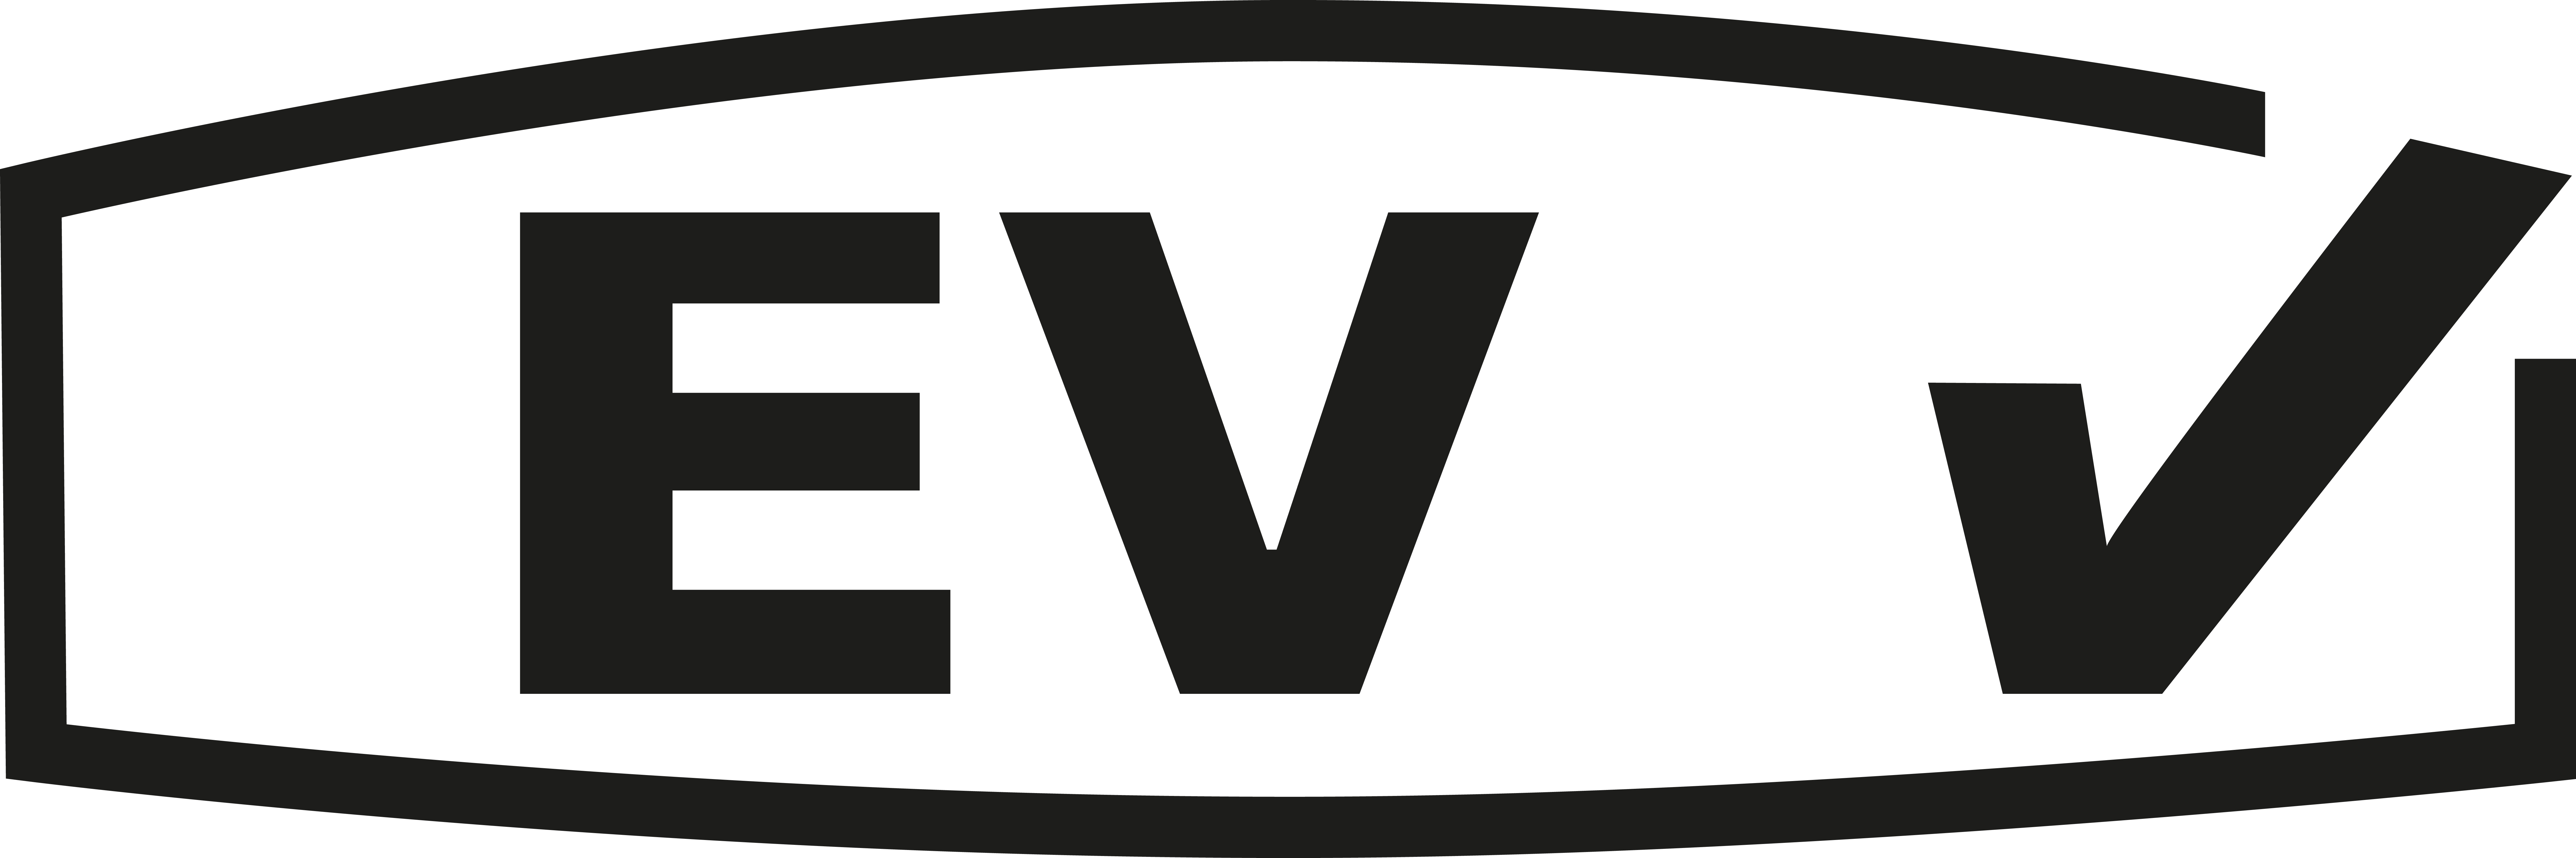 EV-kompatibel